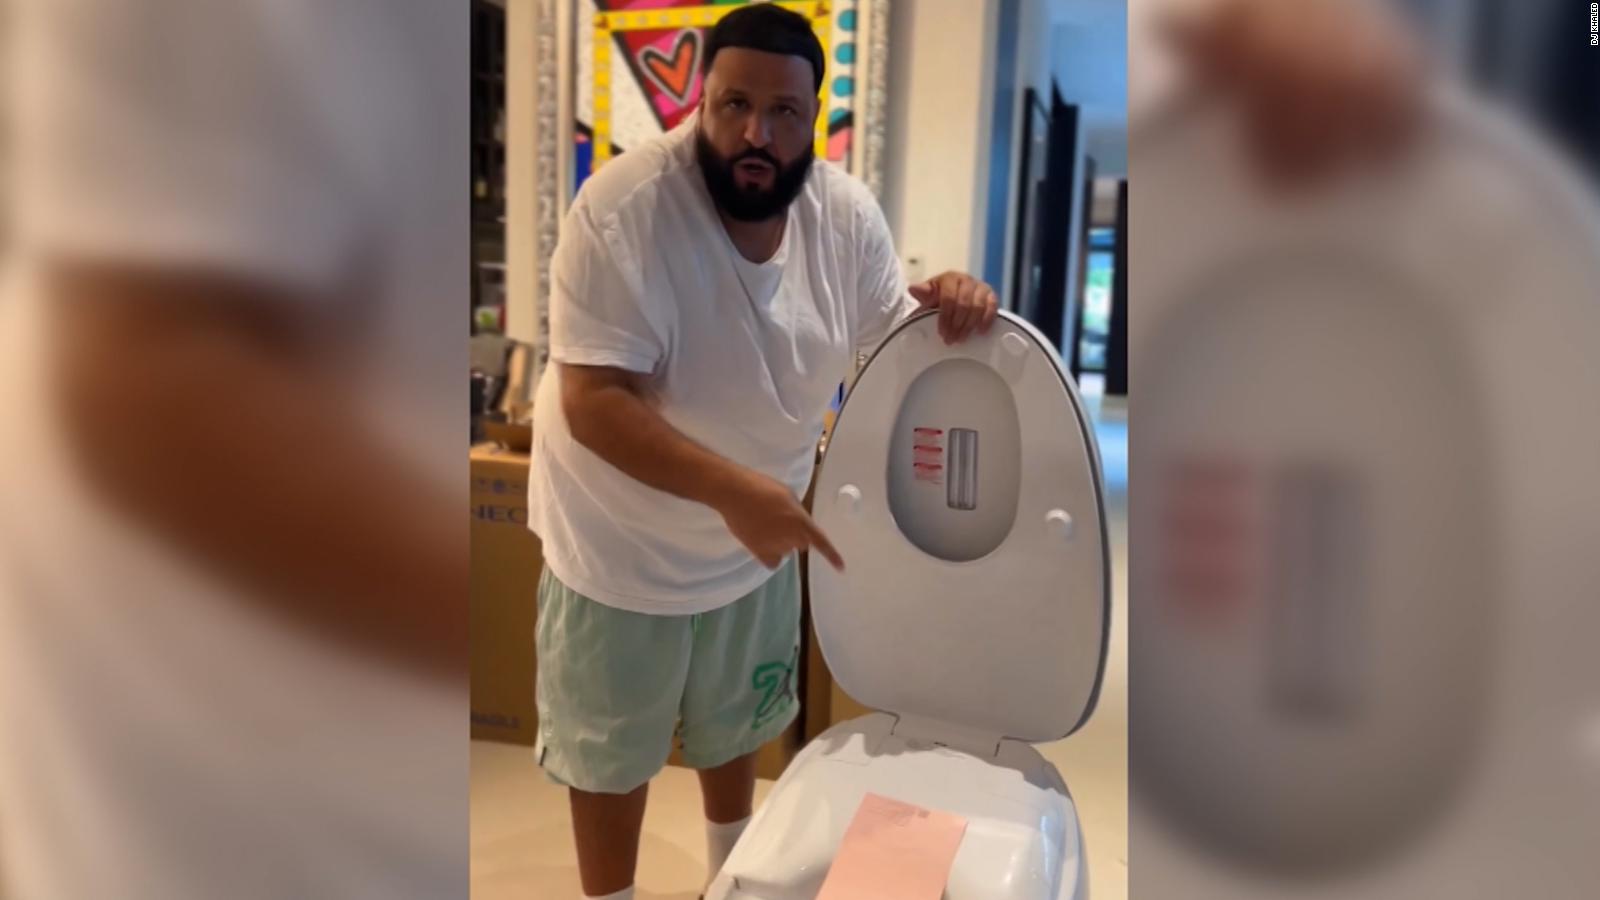 Objeción vóleibol Júnior Drake regala 4 inodoros de lujo a DJ Khaled